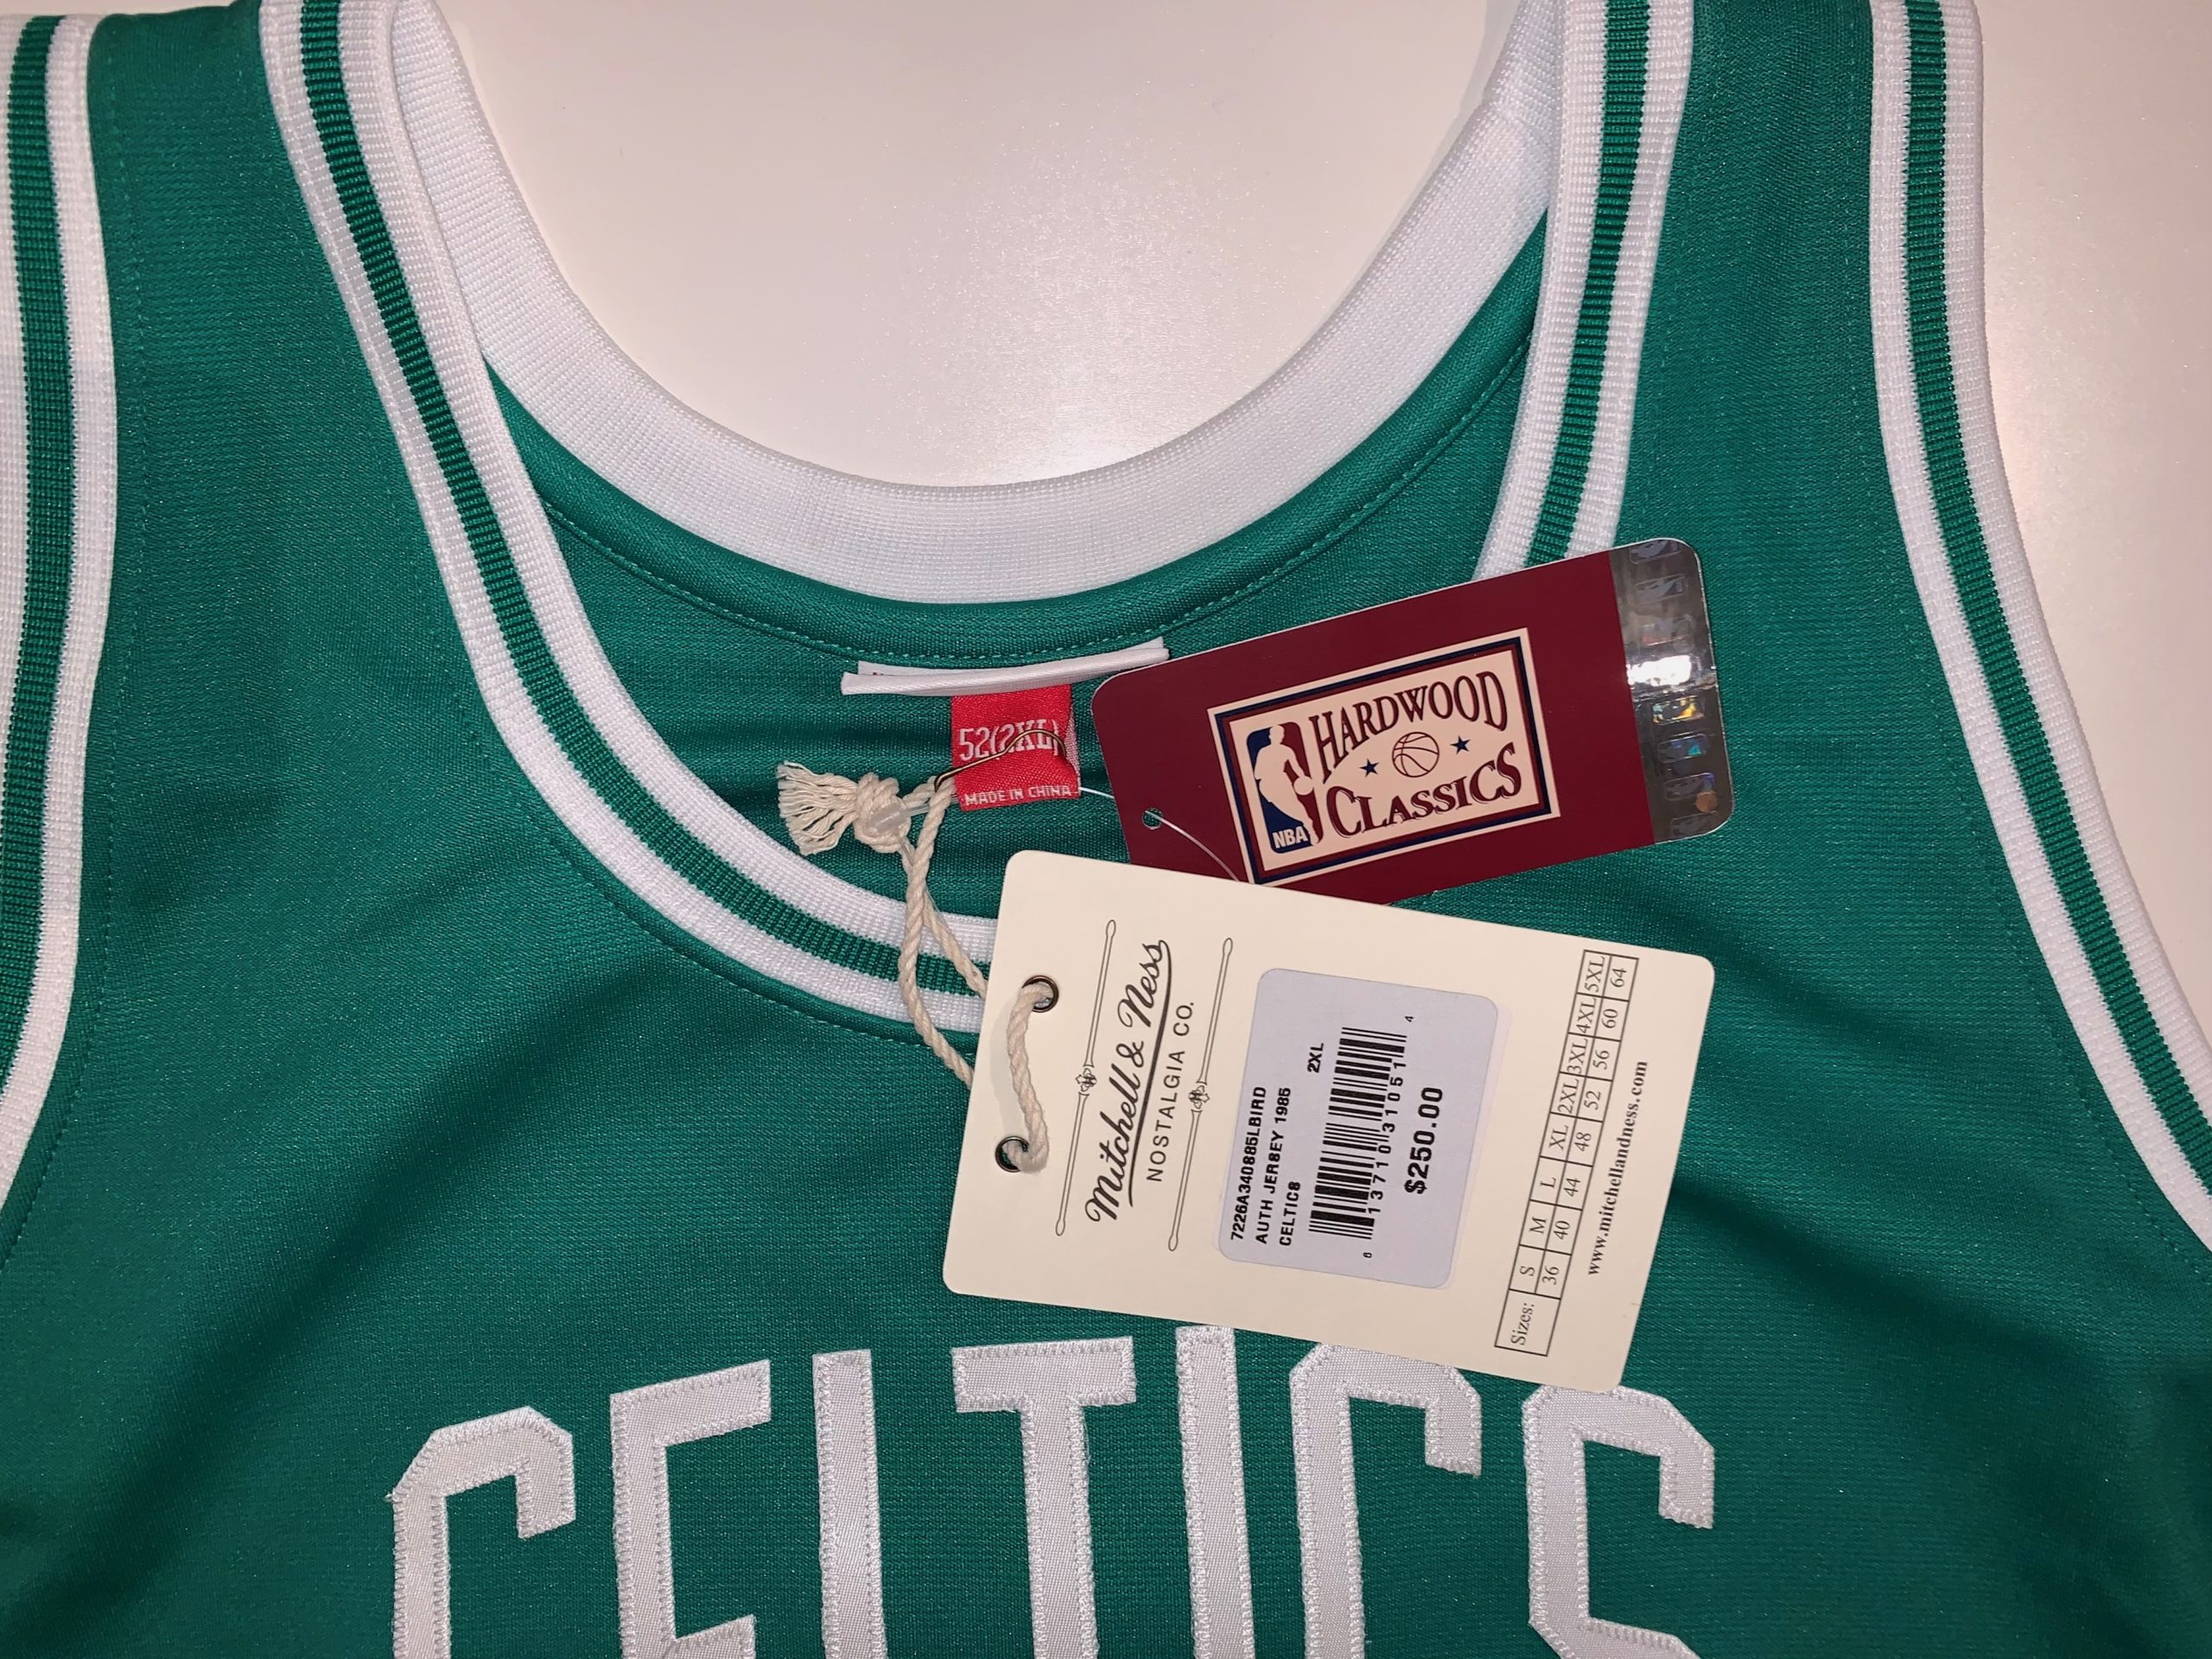 Larry Bird 1985-86 Boston Celtics Mitchell & Ness jersey size 48